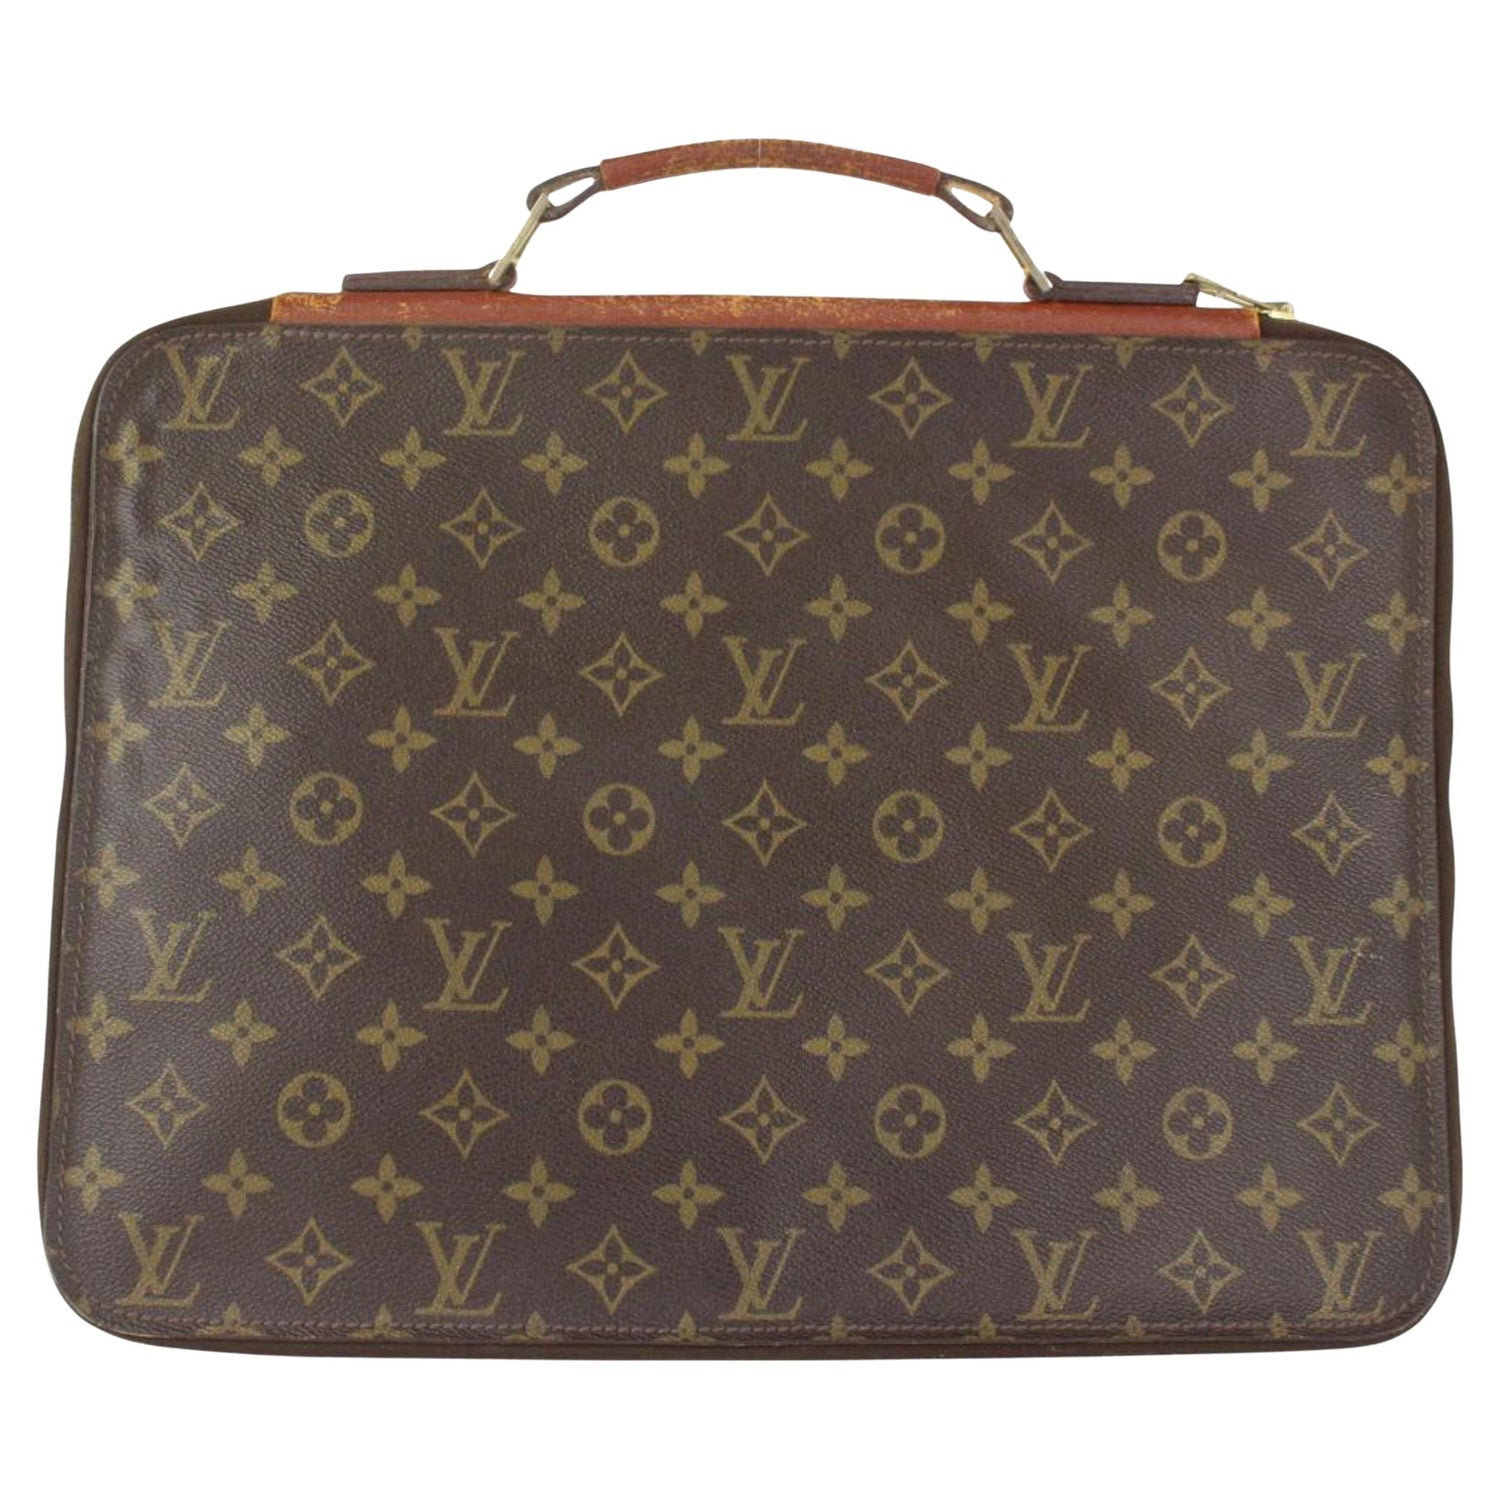 How to Authenticate Louis Vuitton Bags When Shopping Online Luxury Con -  BougieHabit